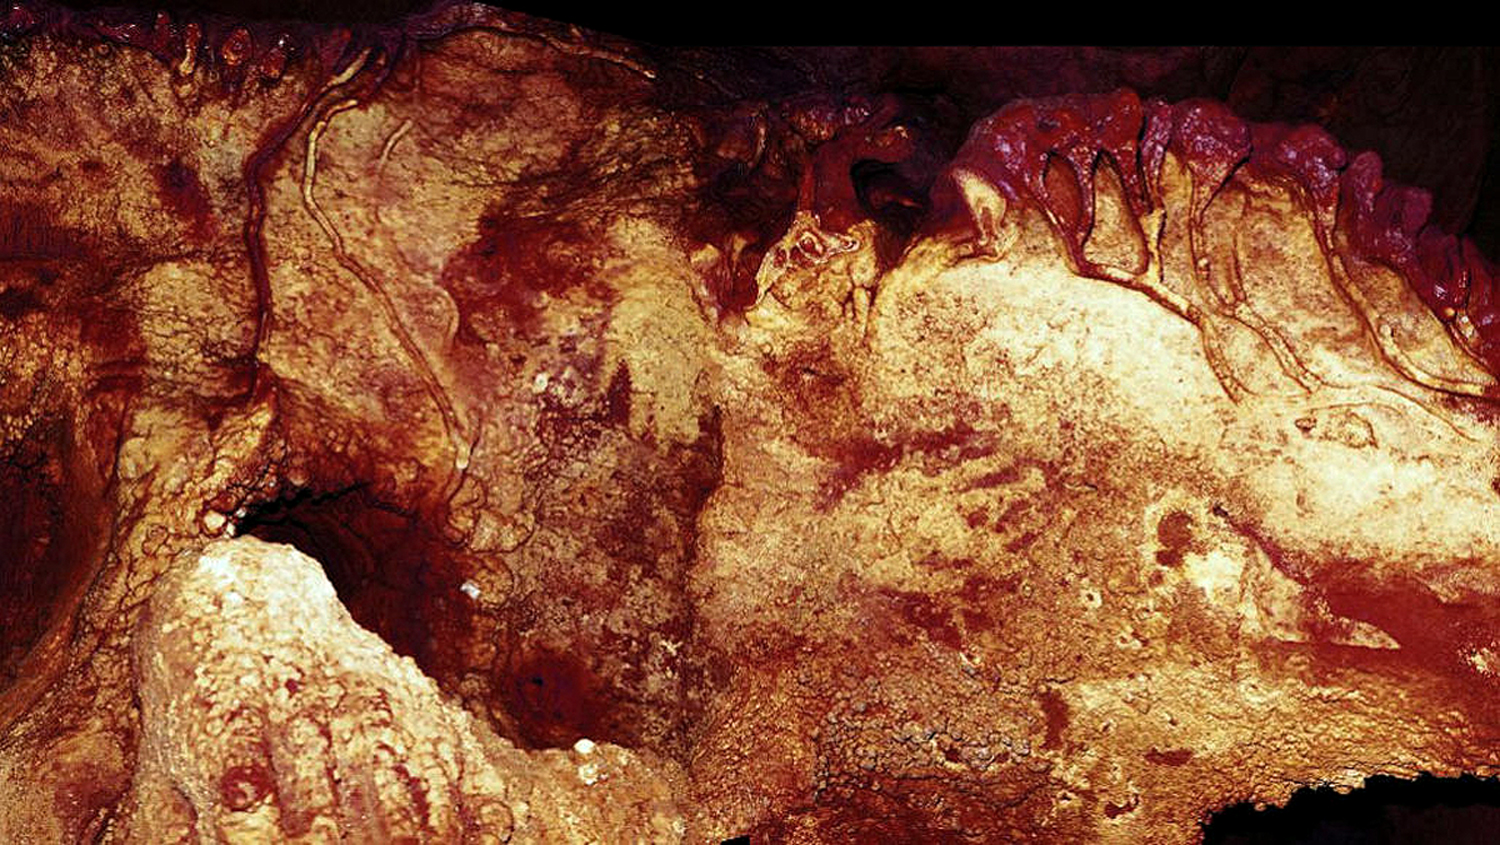 Dating questions challenge whether Neandertals drew Spanish cave art uranium-thorium dating radioactive Journal of Human Evolution Chauvet Altamira